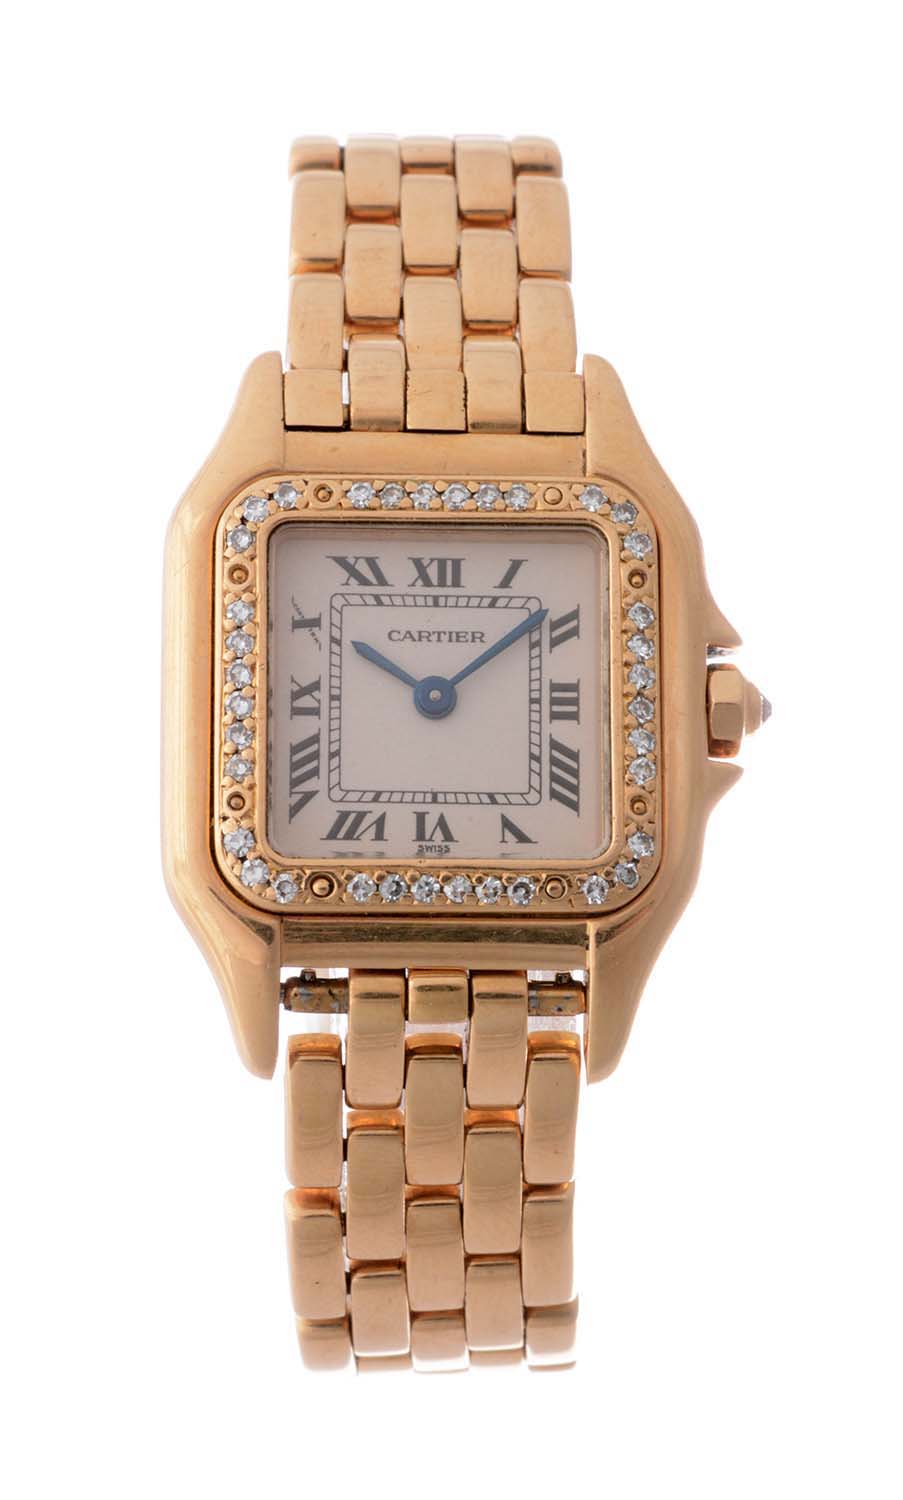 Cartier 18k Ladies Diamond Bezel Panthere Wristwatch, estimated at $4,000-6,000.